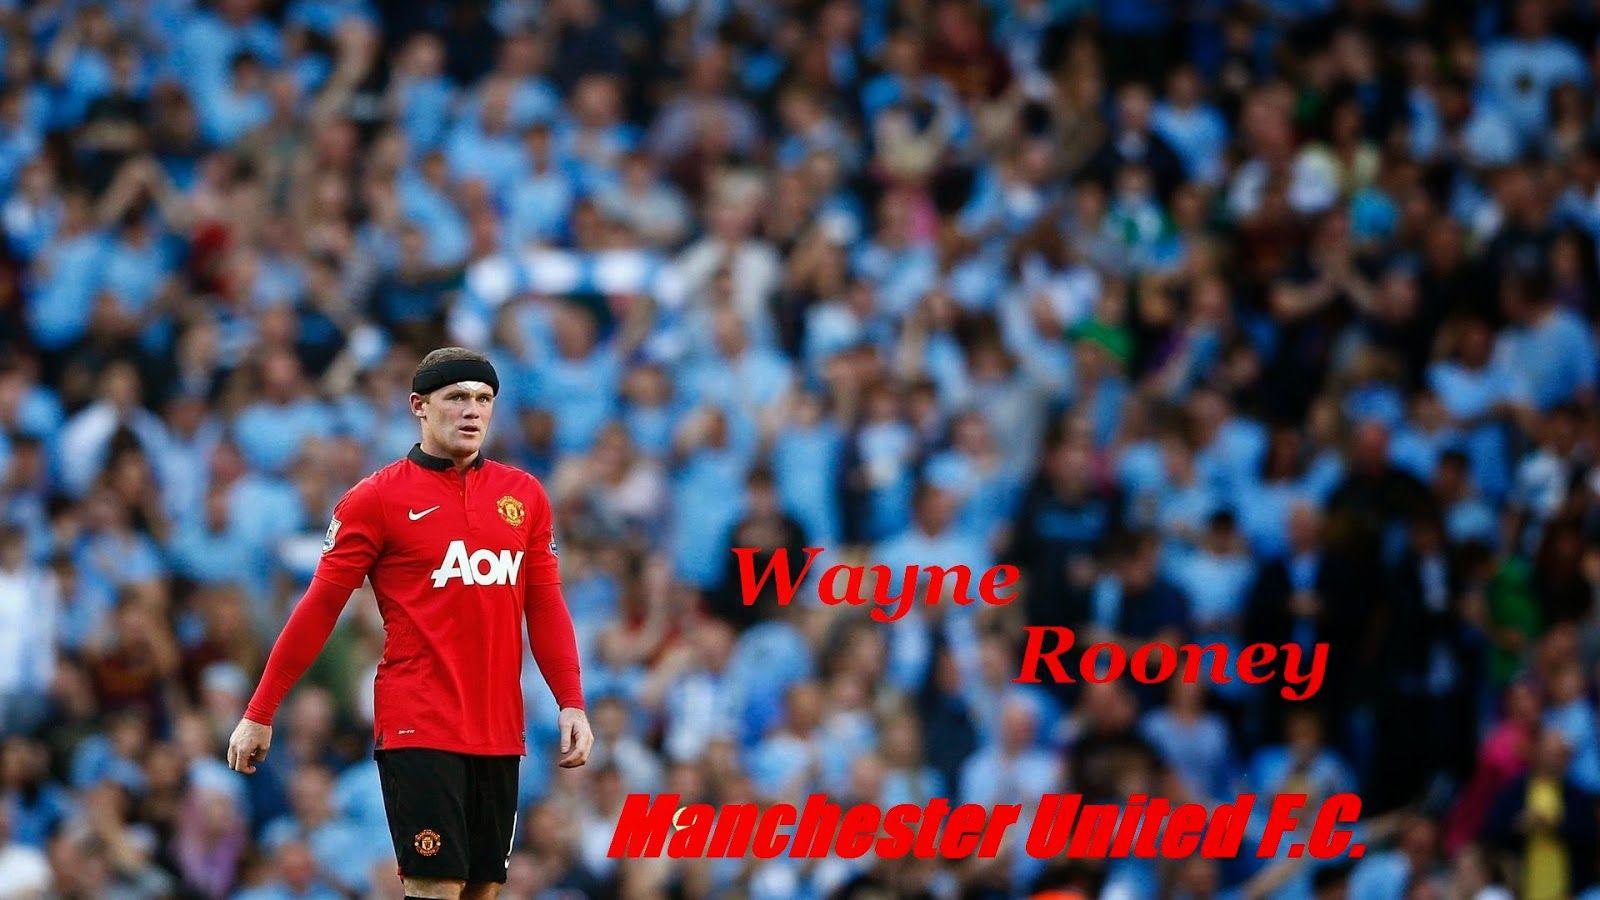 Wallpaper HD Corner Wayne Rooney